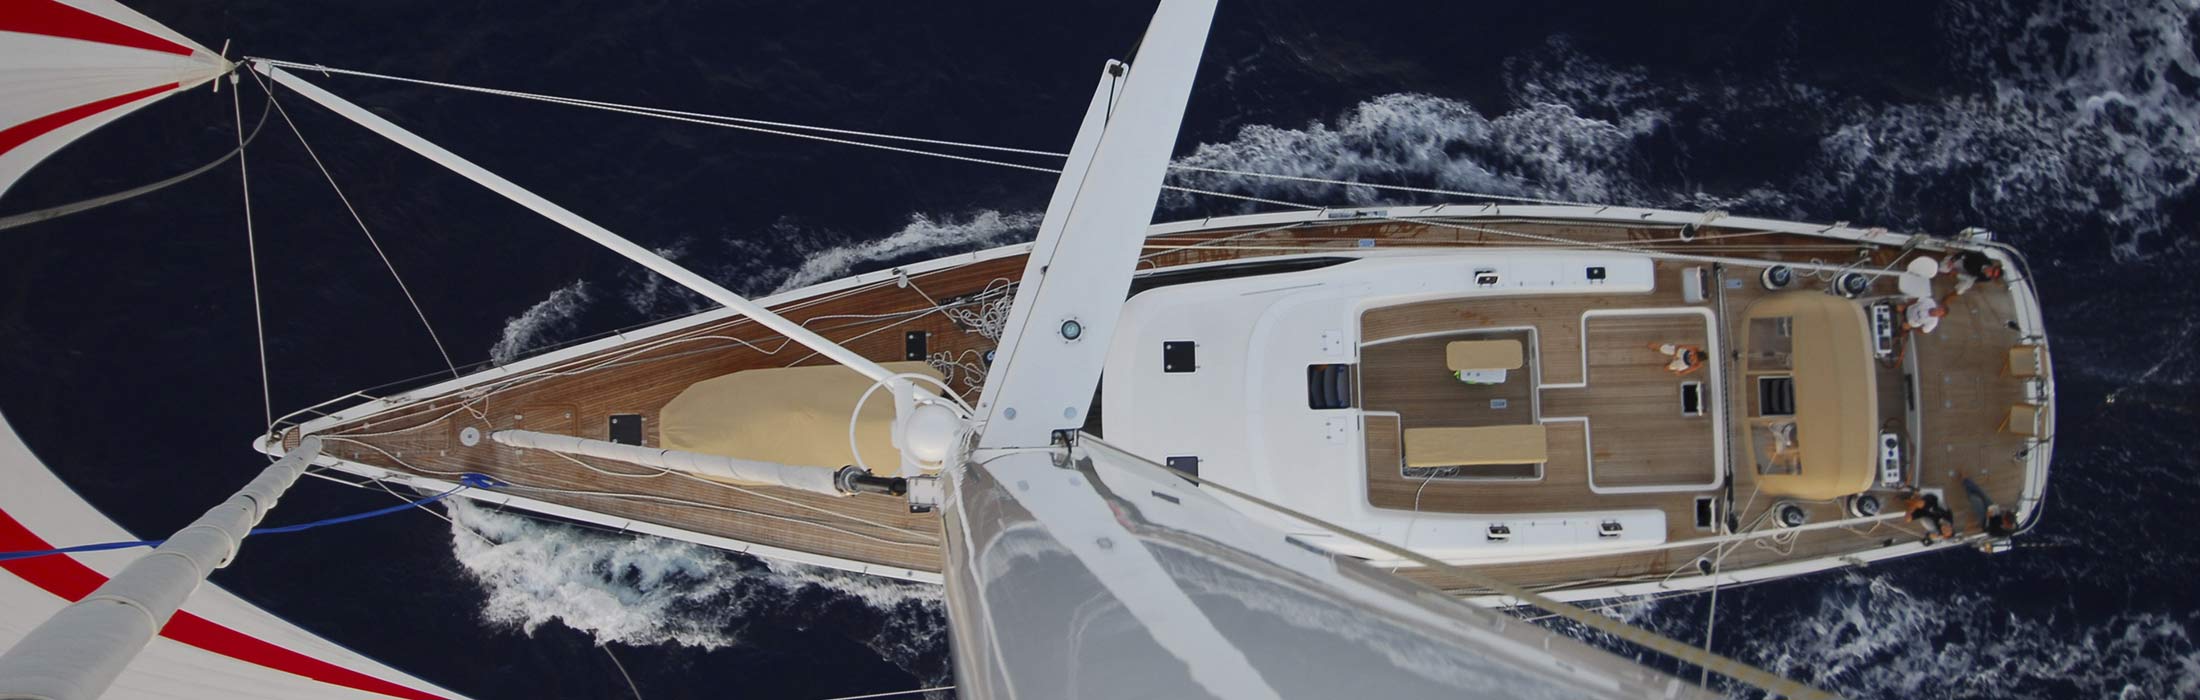 luxury yacht charter destinations carribean bahamas carribean windward islands main slider 1 5